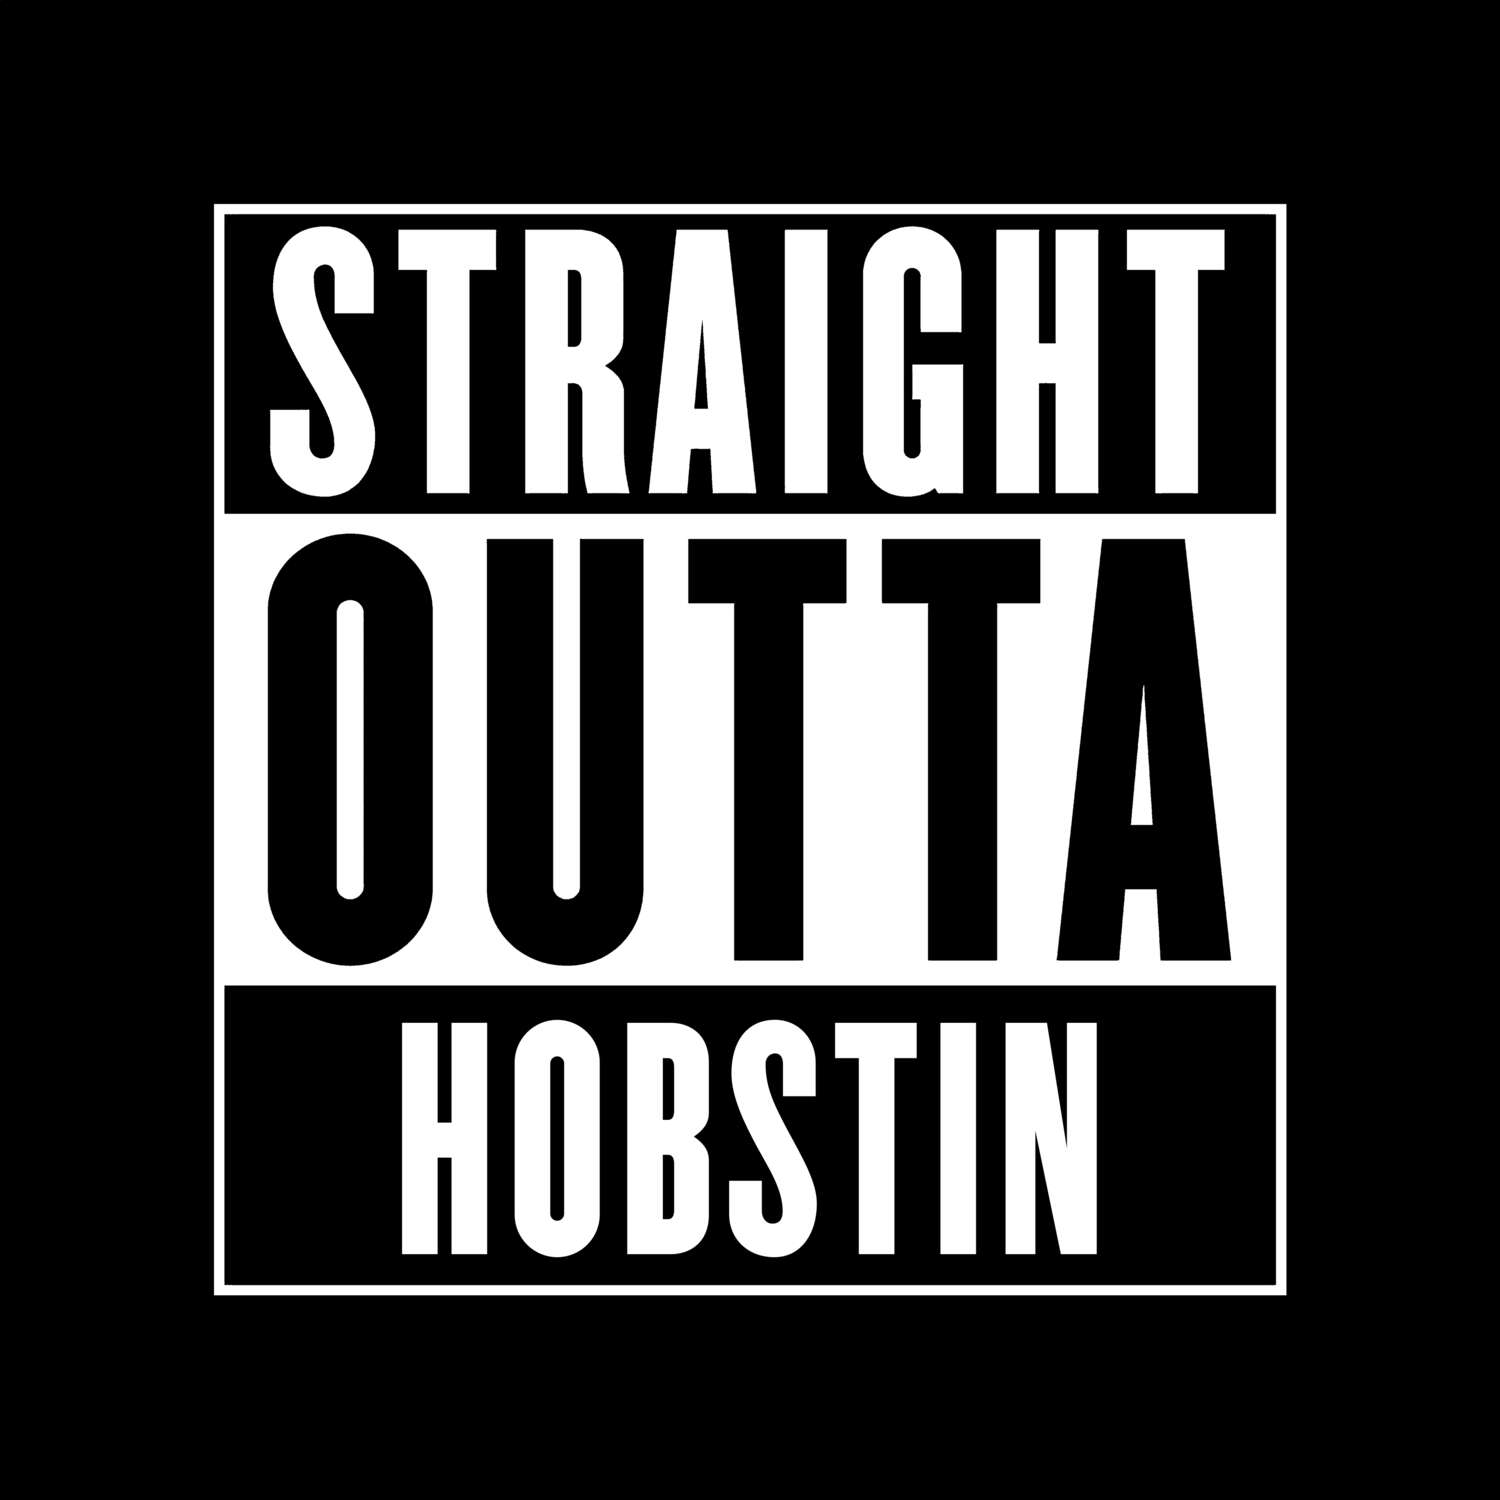 Hobstin T-Shirt »Straight Outta«